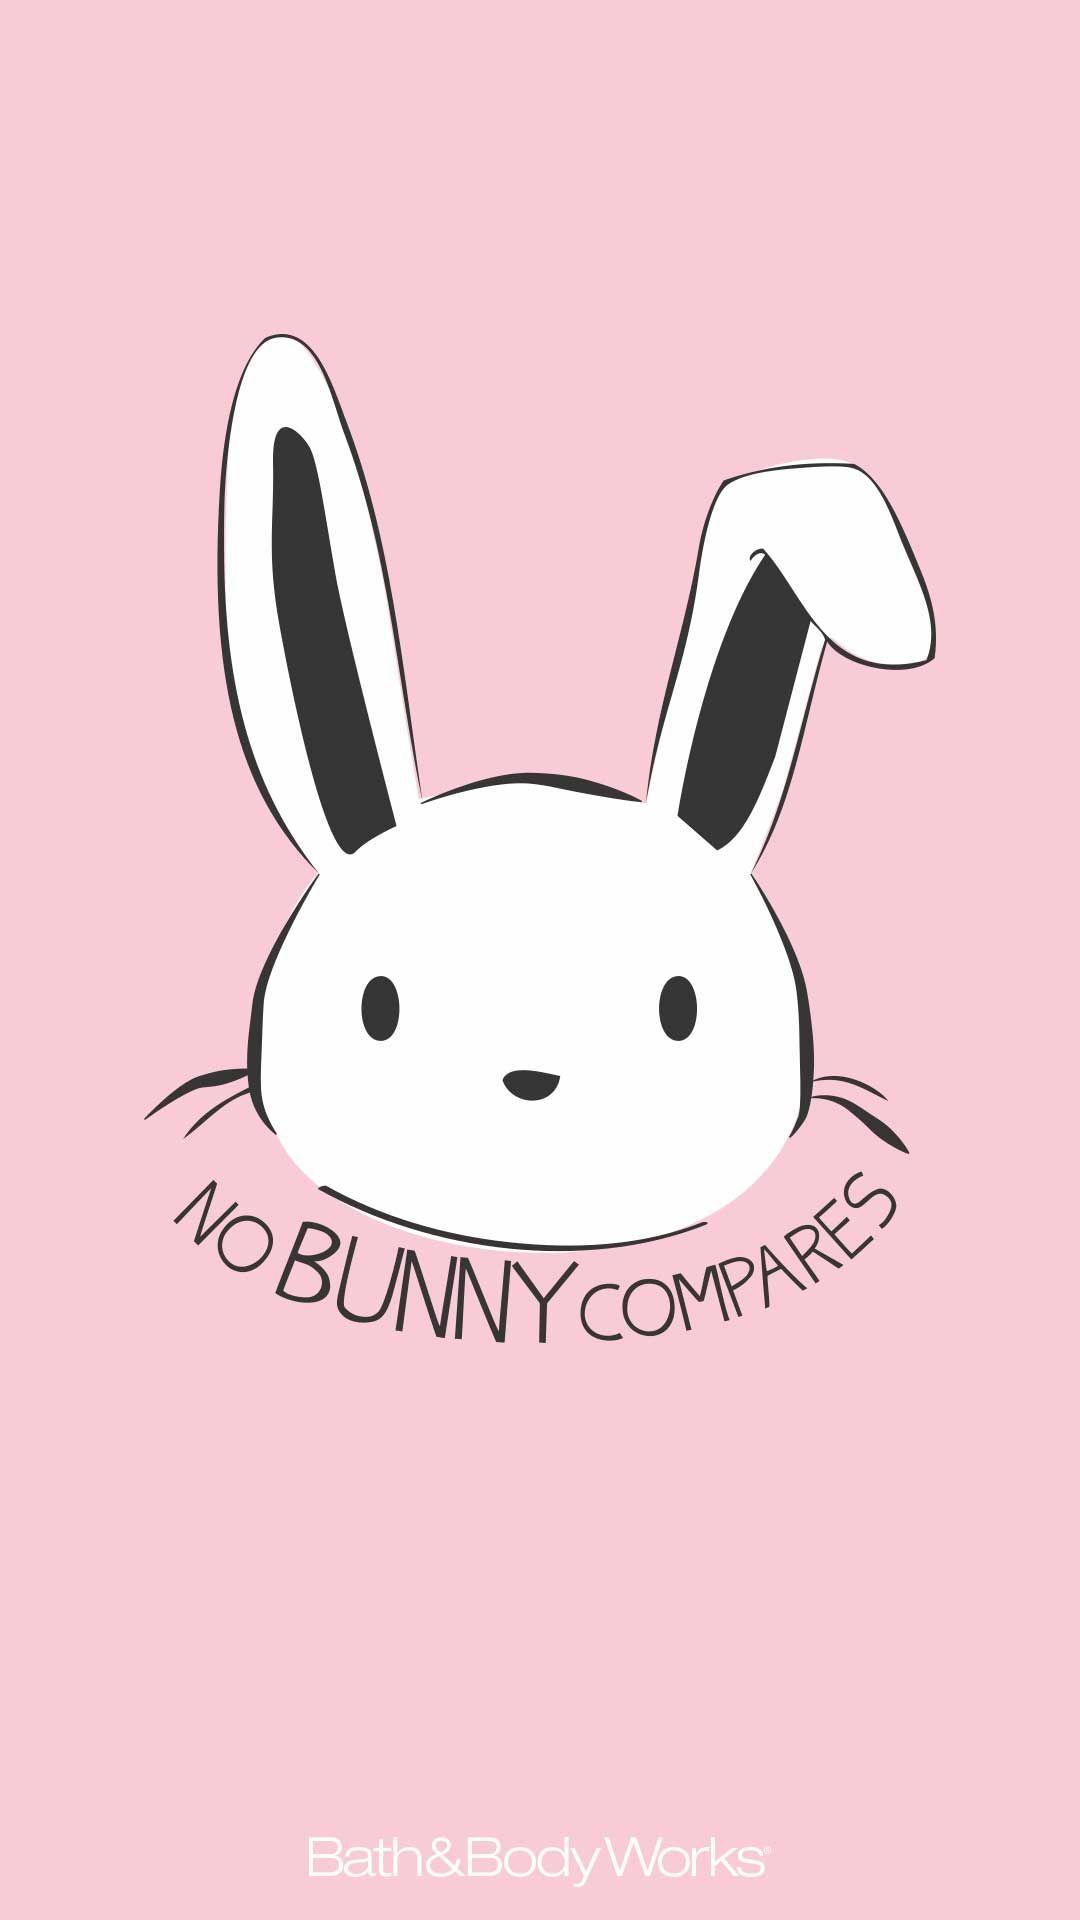 No Bunny Compares Easter iPhone Wallpaper. Rabbit